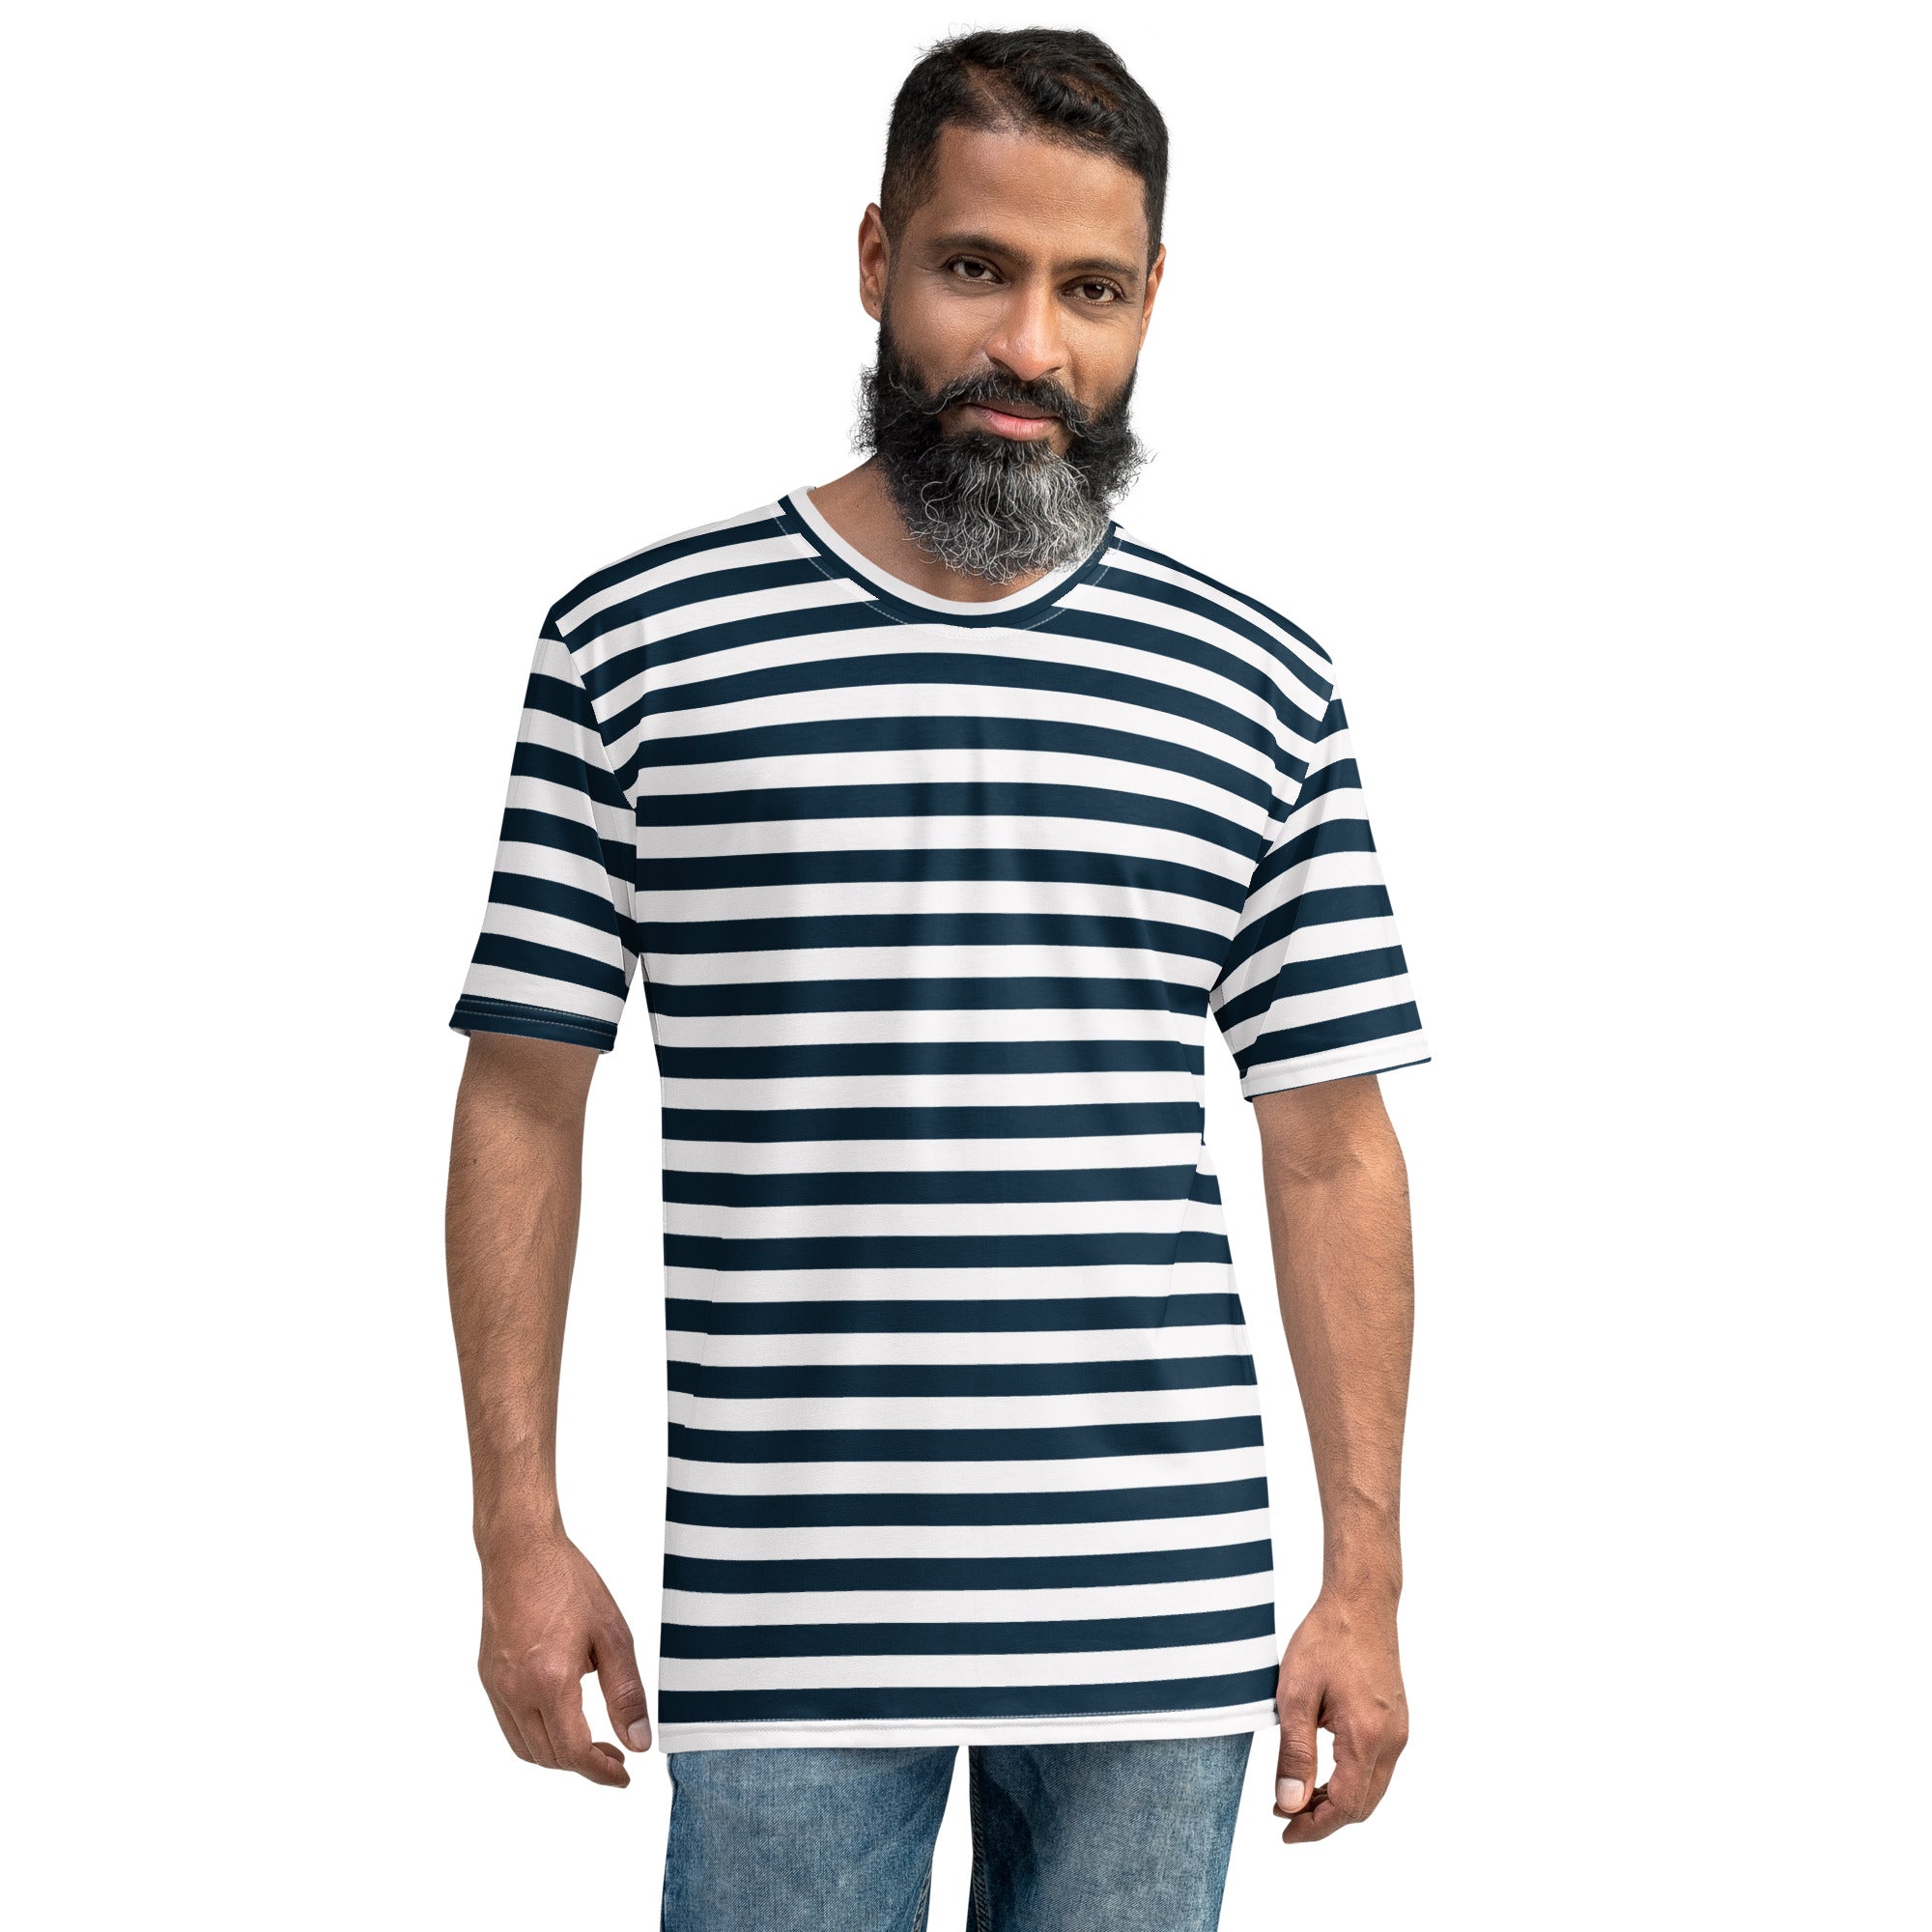 Blue and White Stripes Men's t-shirt, Nautical Theme Shirt, Boat